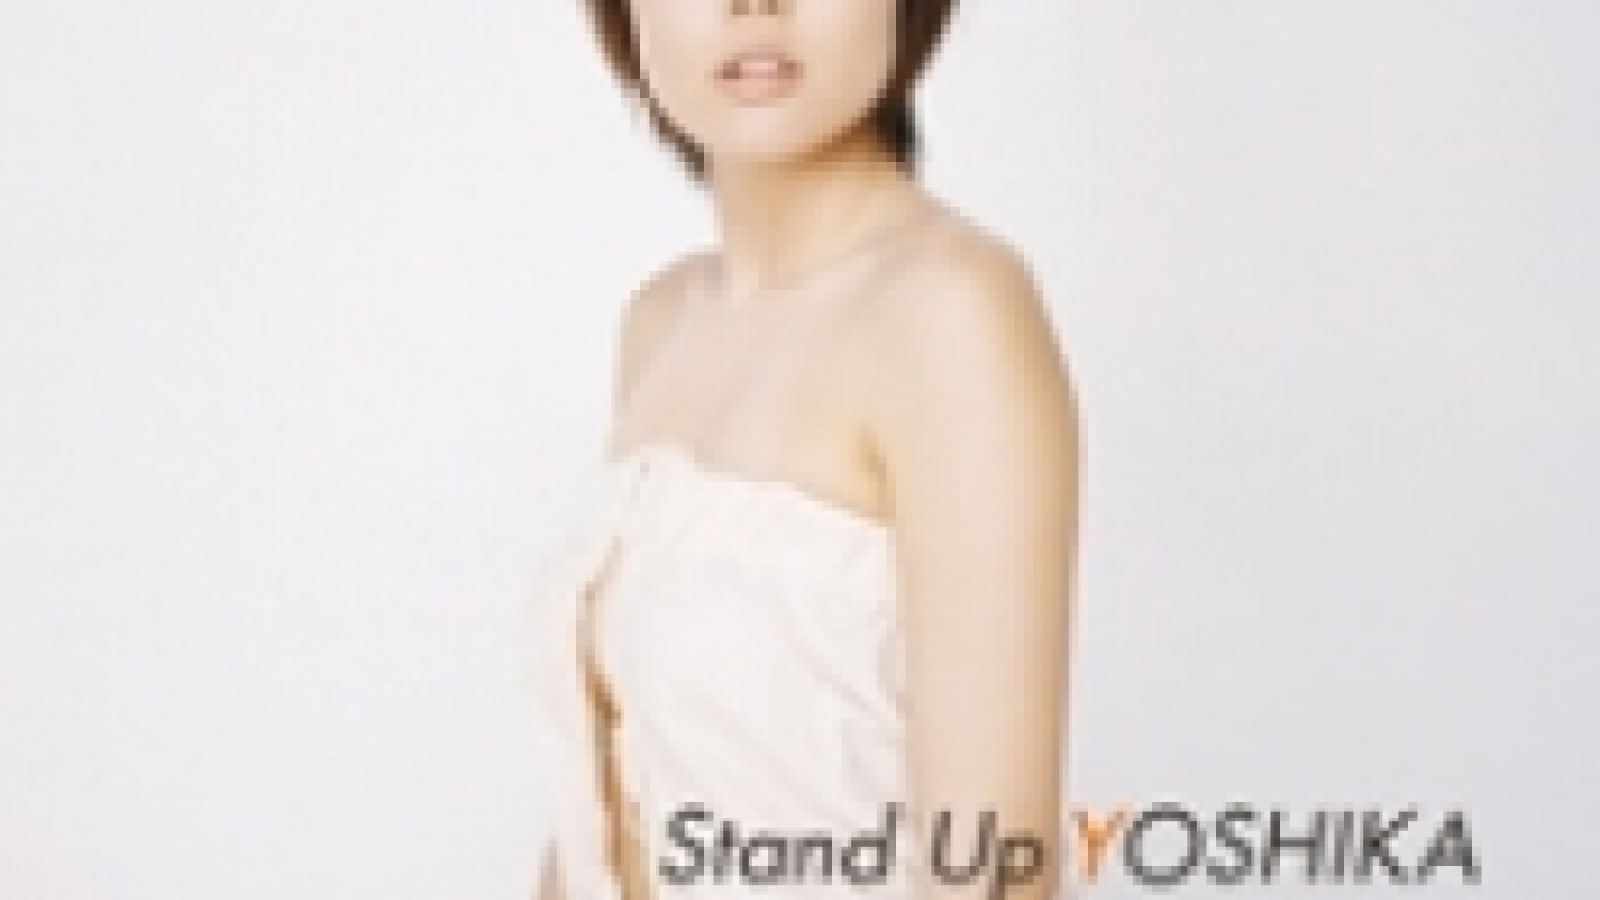 YOSHIKA - Stand Up © JaME